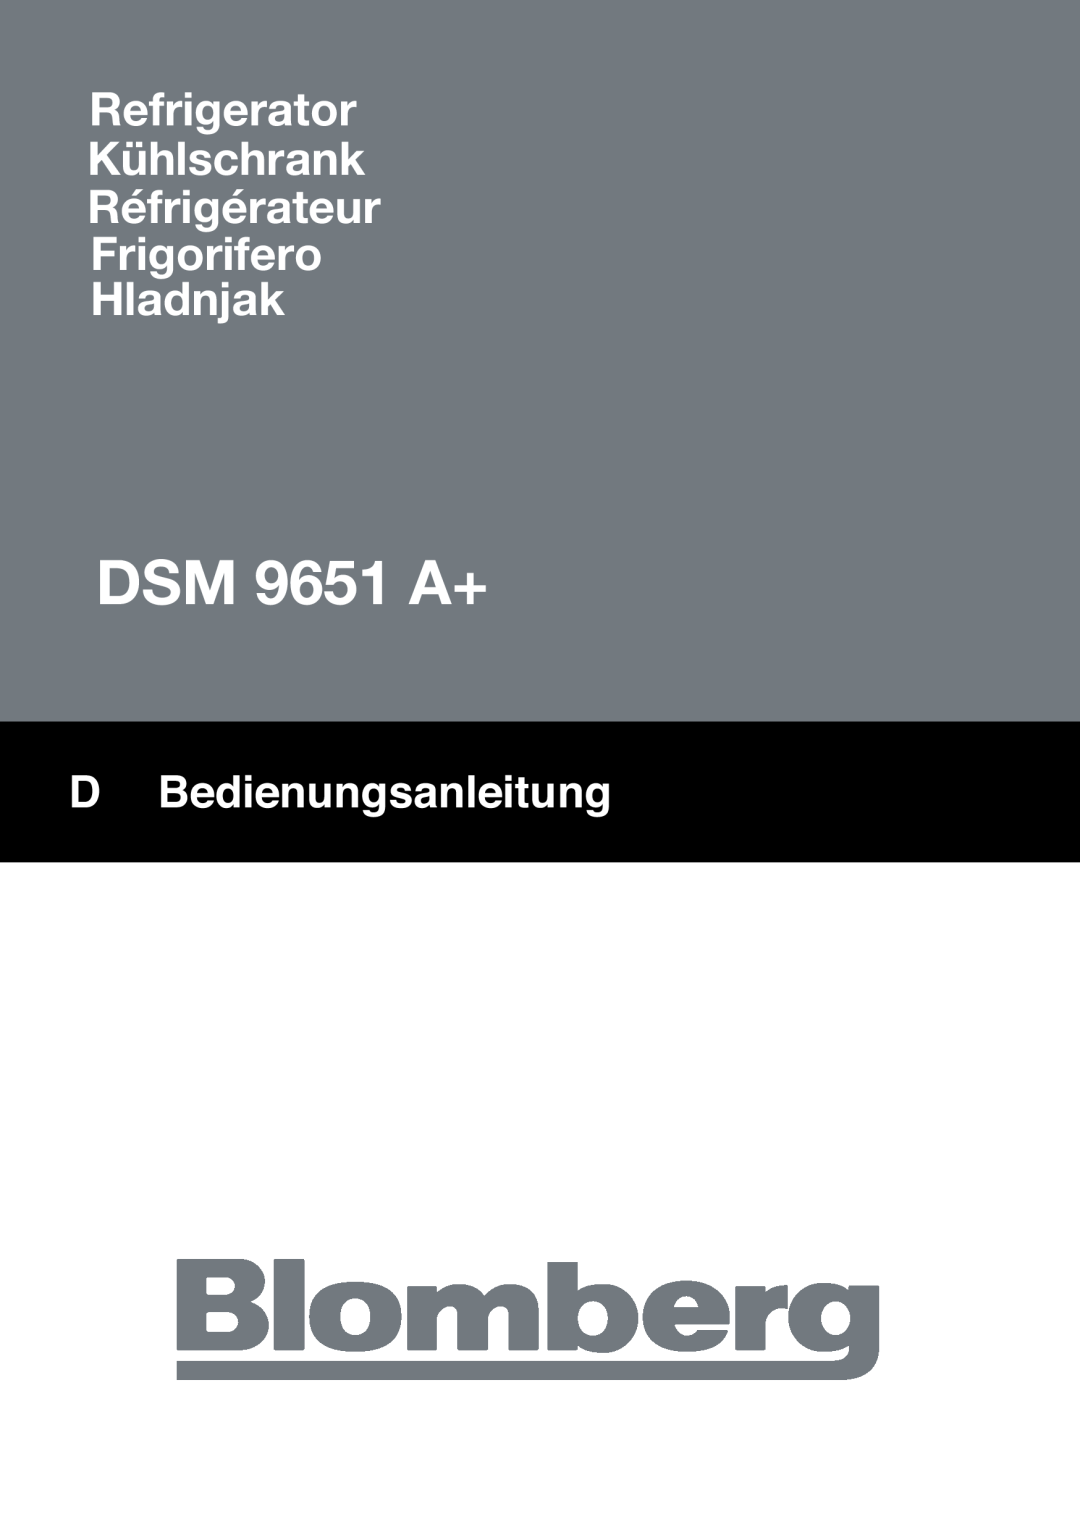 Blomberg DSM 9651 A+ manual Refrigerator Kühlschrank Réfrigérateur, Frigorifero Hladnjak, DBedienungsanleitung 